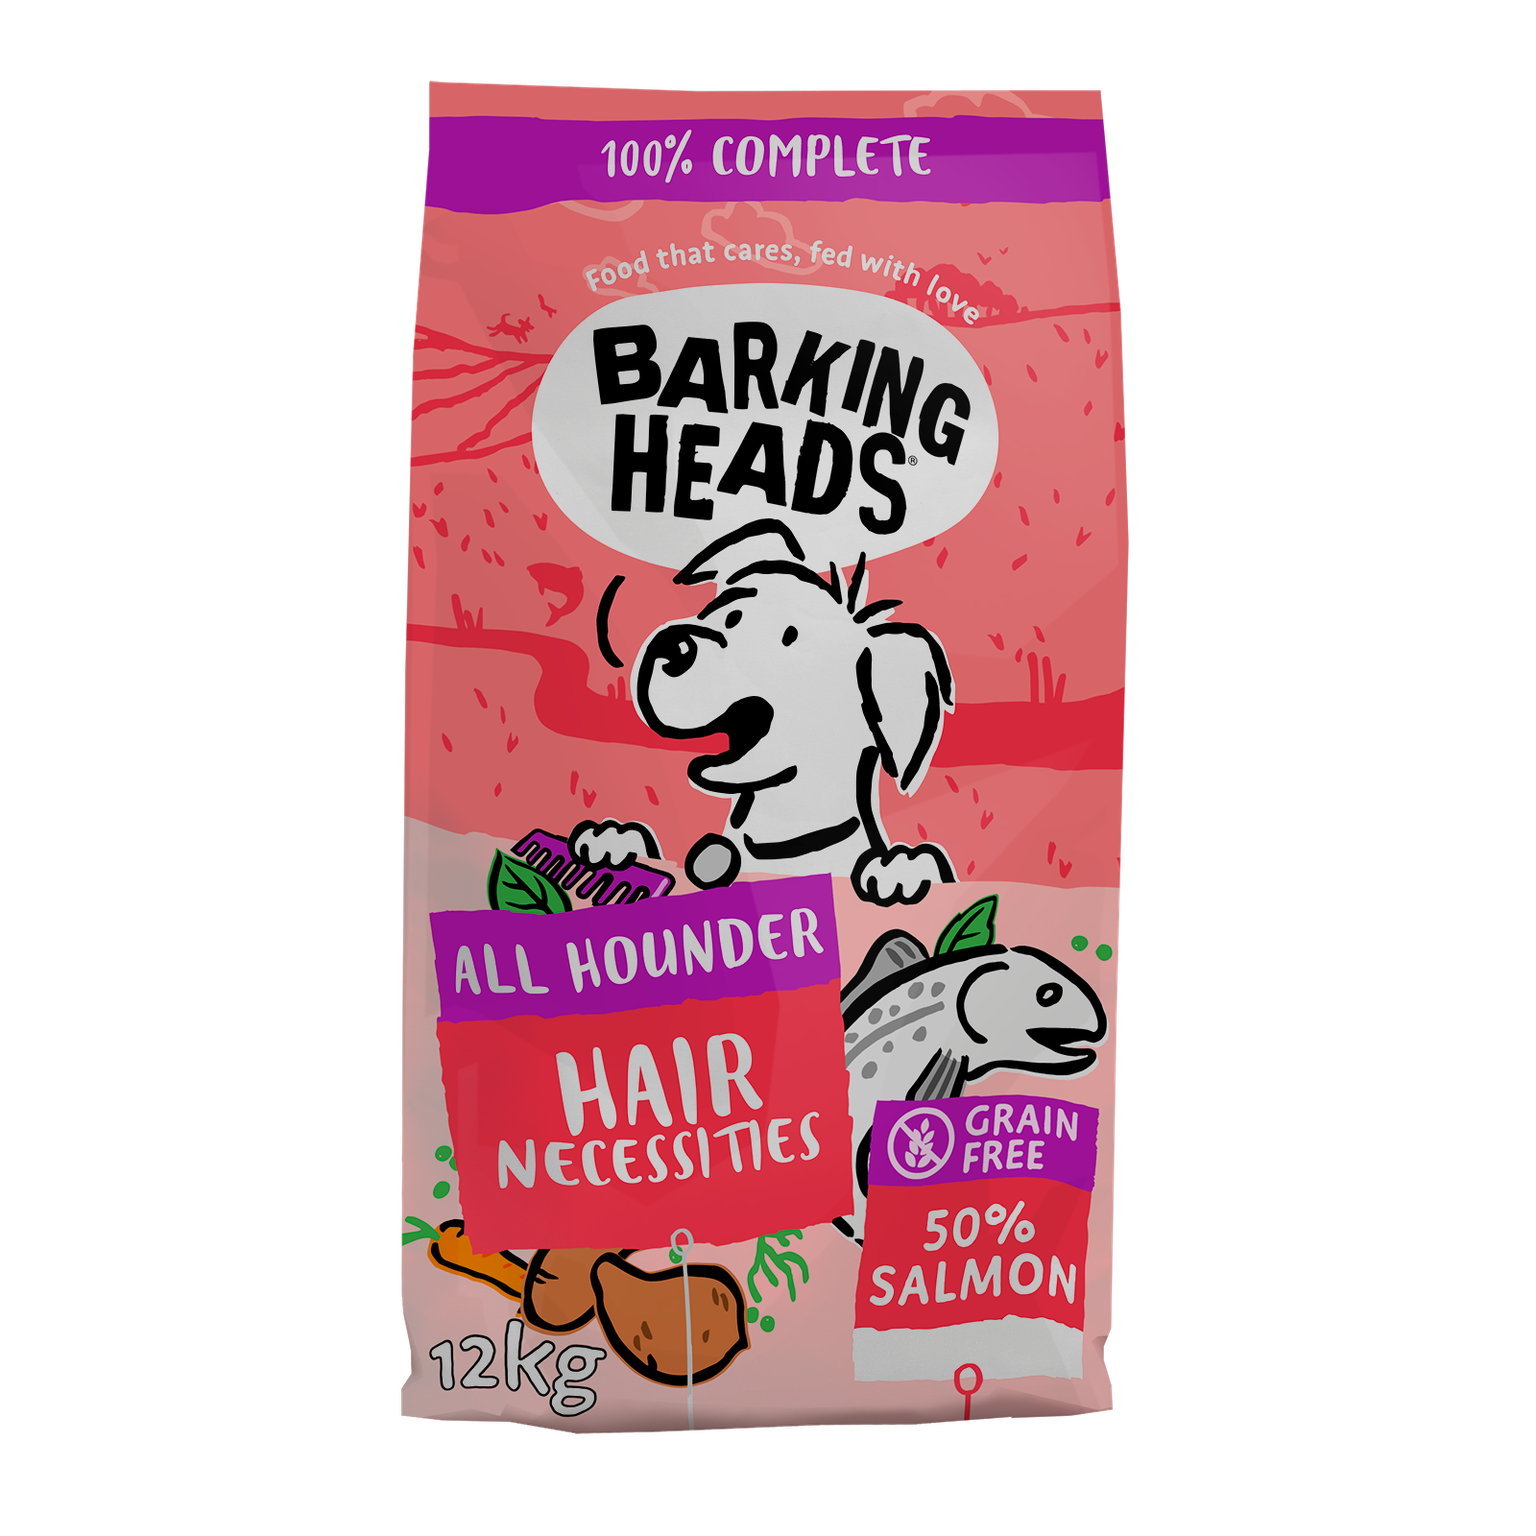 Barking Heads All Hounder Hair Necessities Salmon